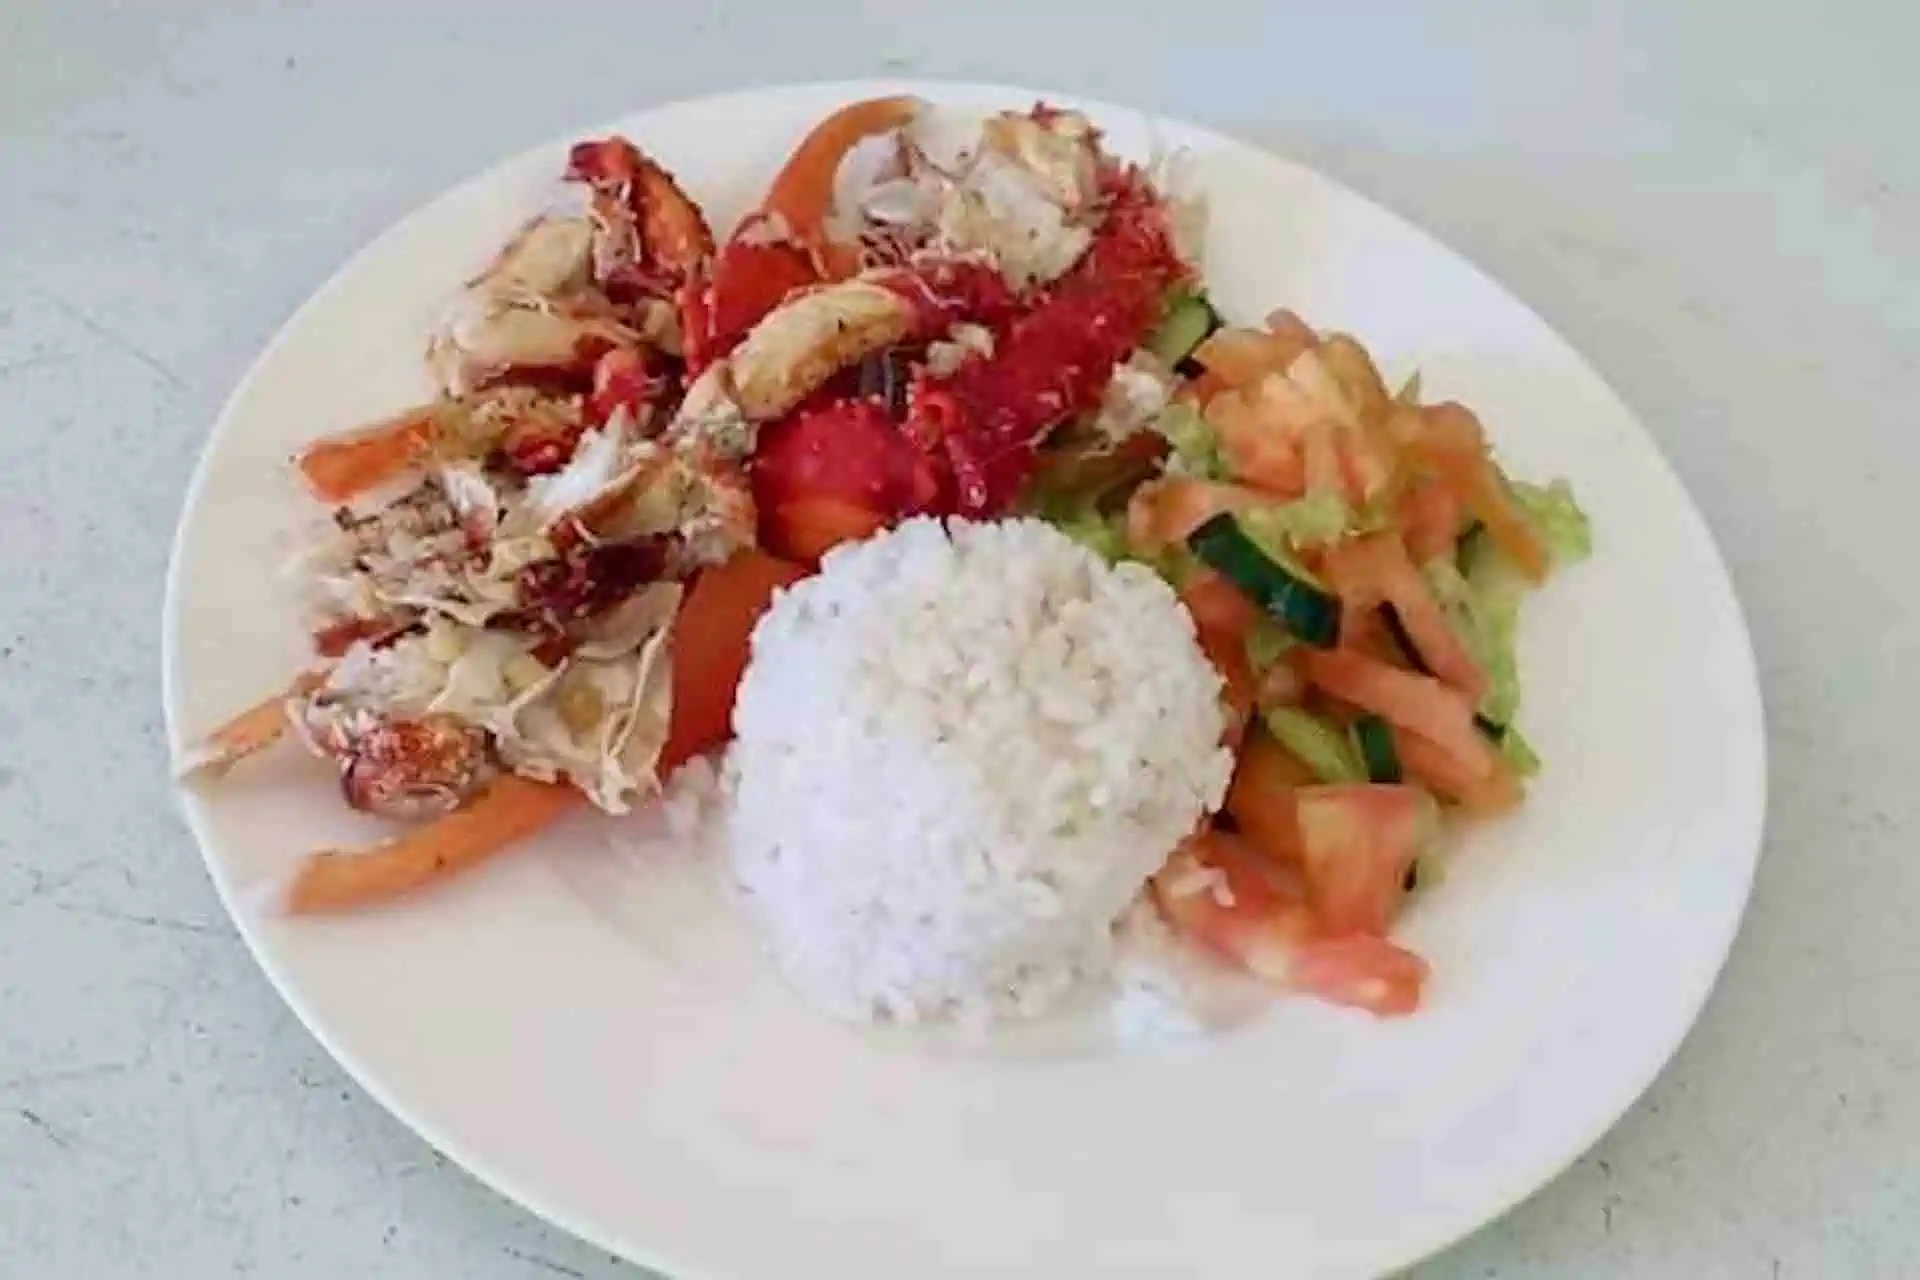 Isla Eneida San Blas lunch plate with seafood and rice